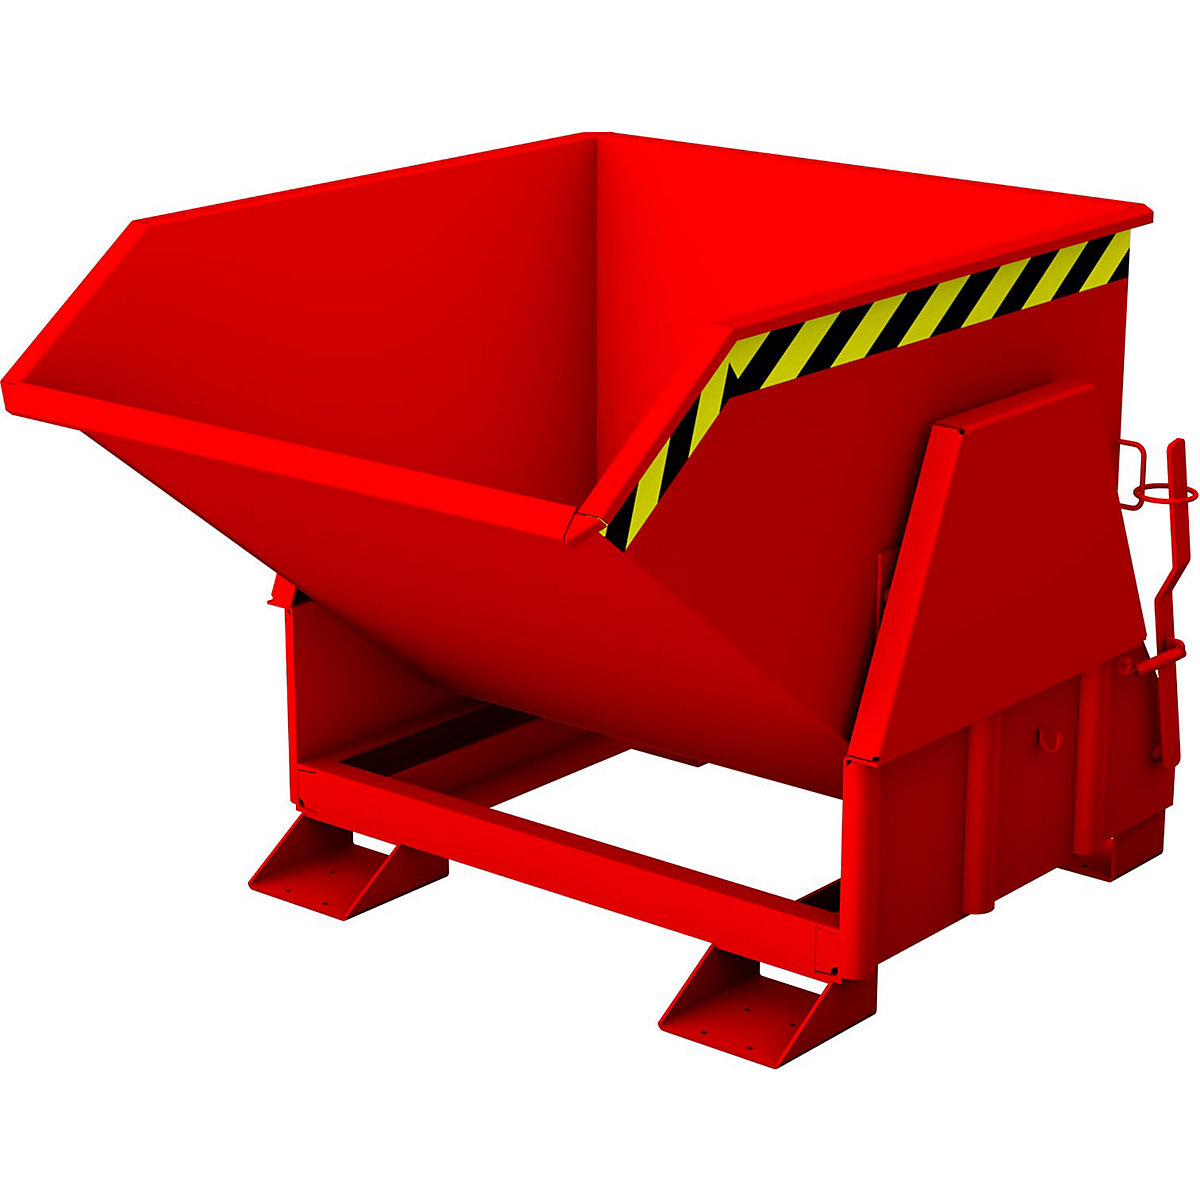 EUROKRAFTpro Kippbehälter, Standard-Bauhöhe, ohne Fahrwerk, Volumen 0,8 m³, lackiert rot RAL 3000